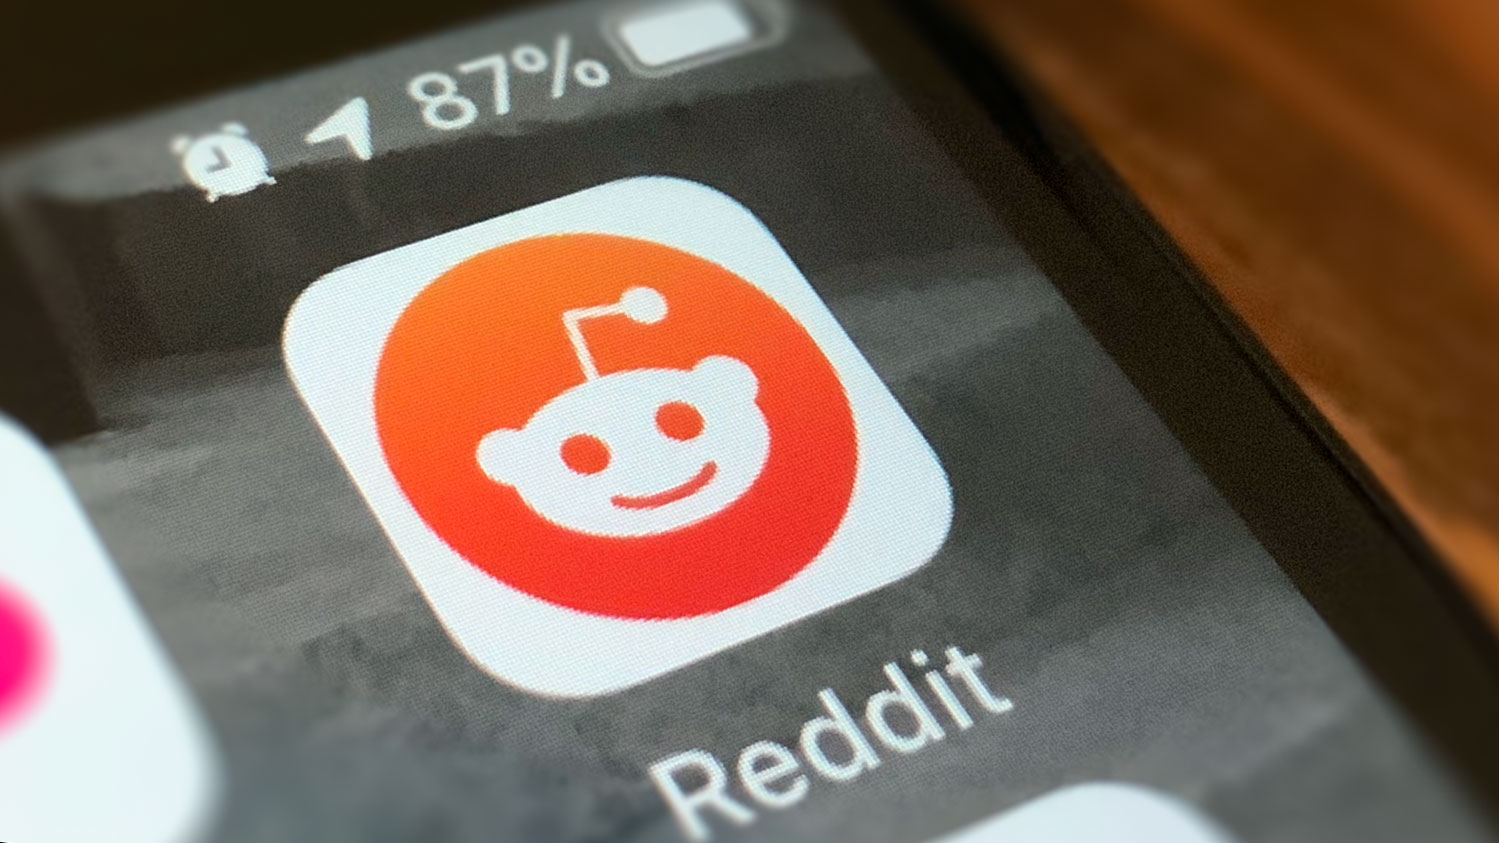 Reddit Icon Iphone